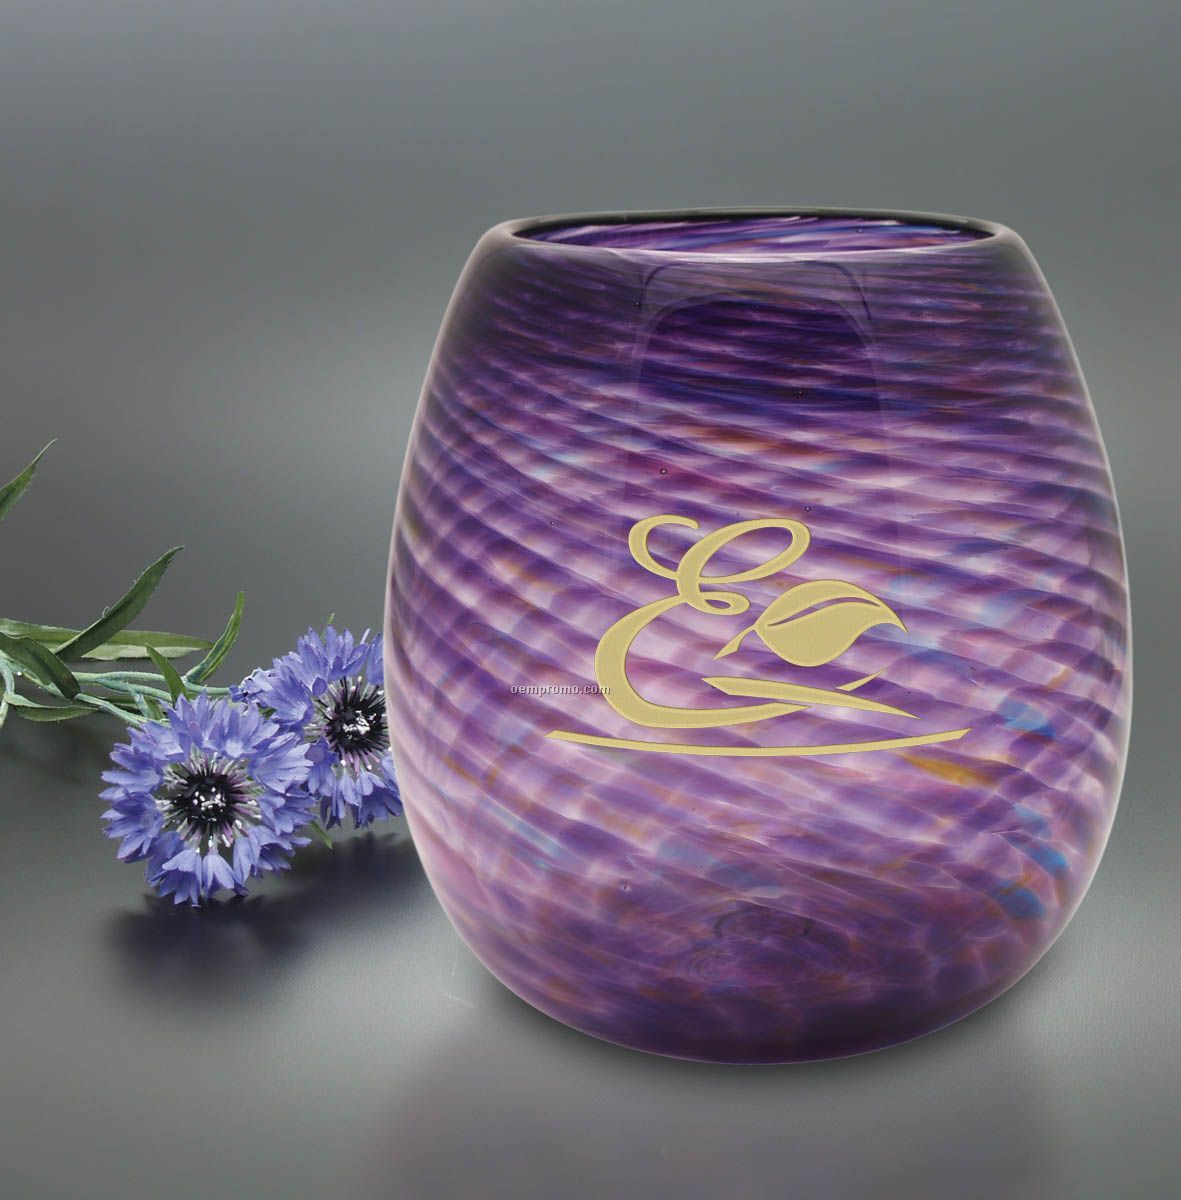 The Windsor Collection Pinnacle Bowl Art Glass Award